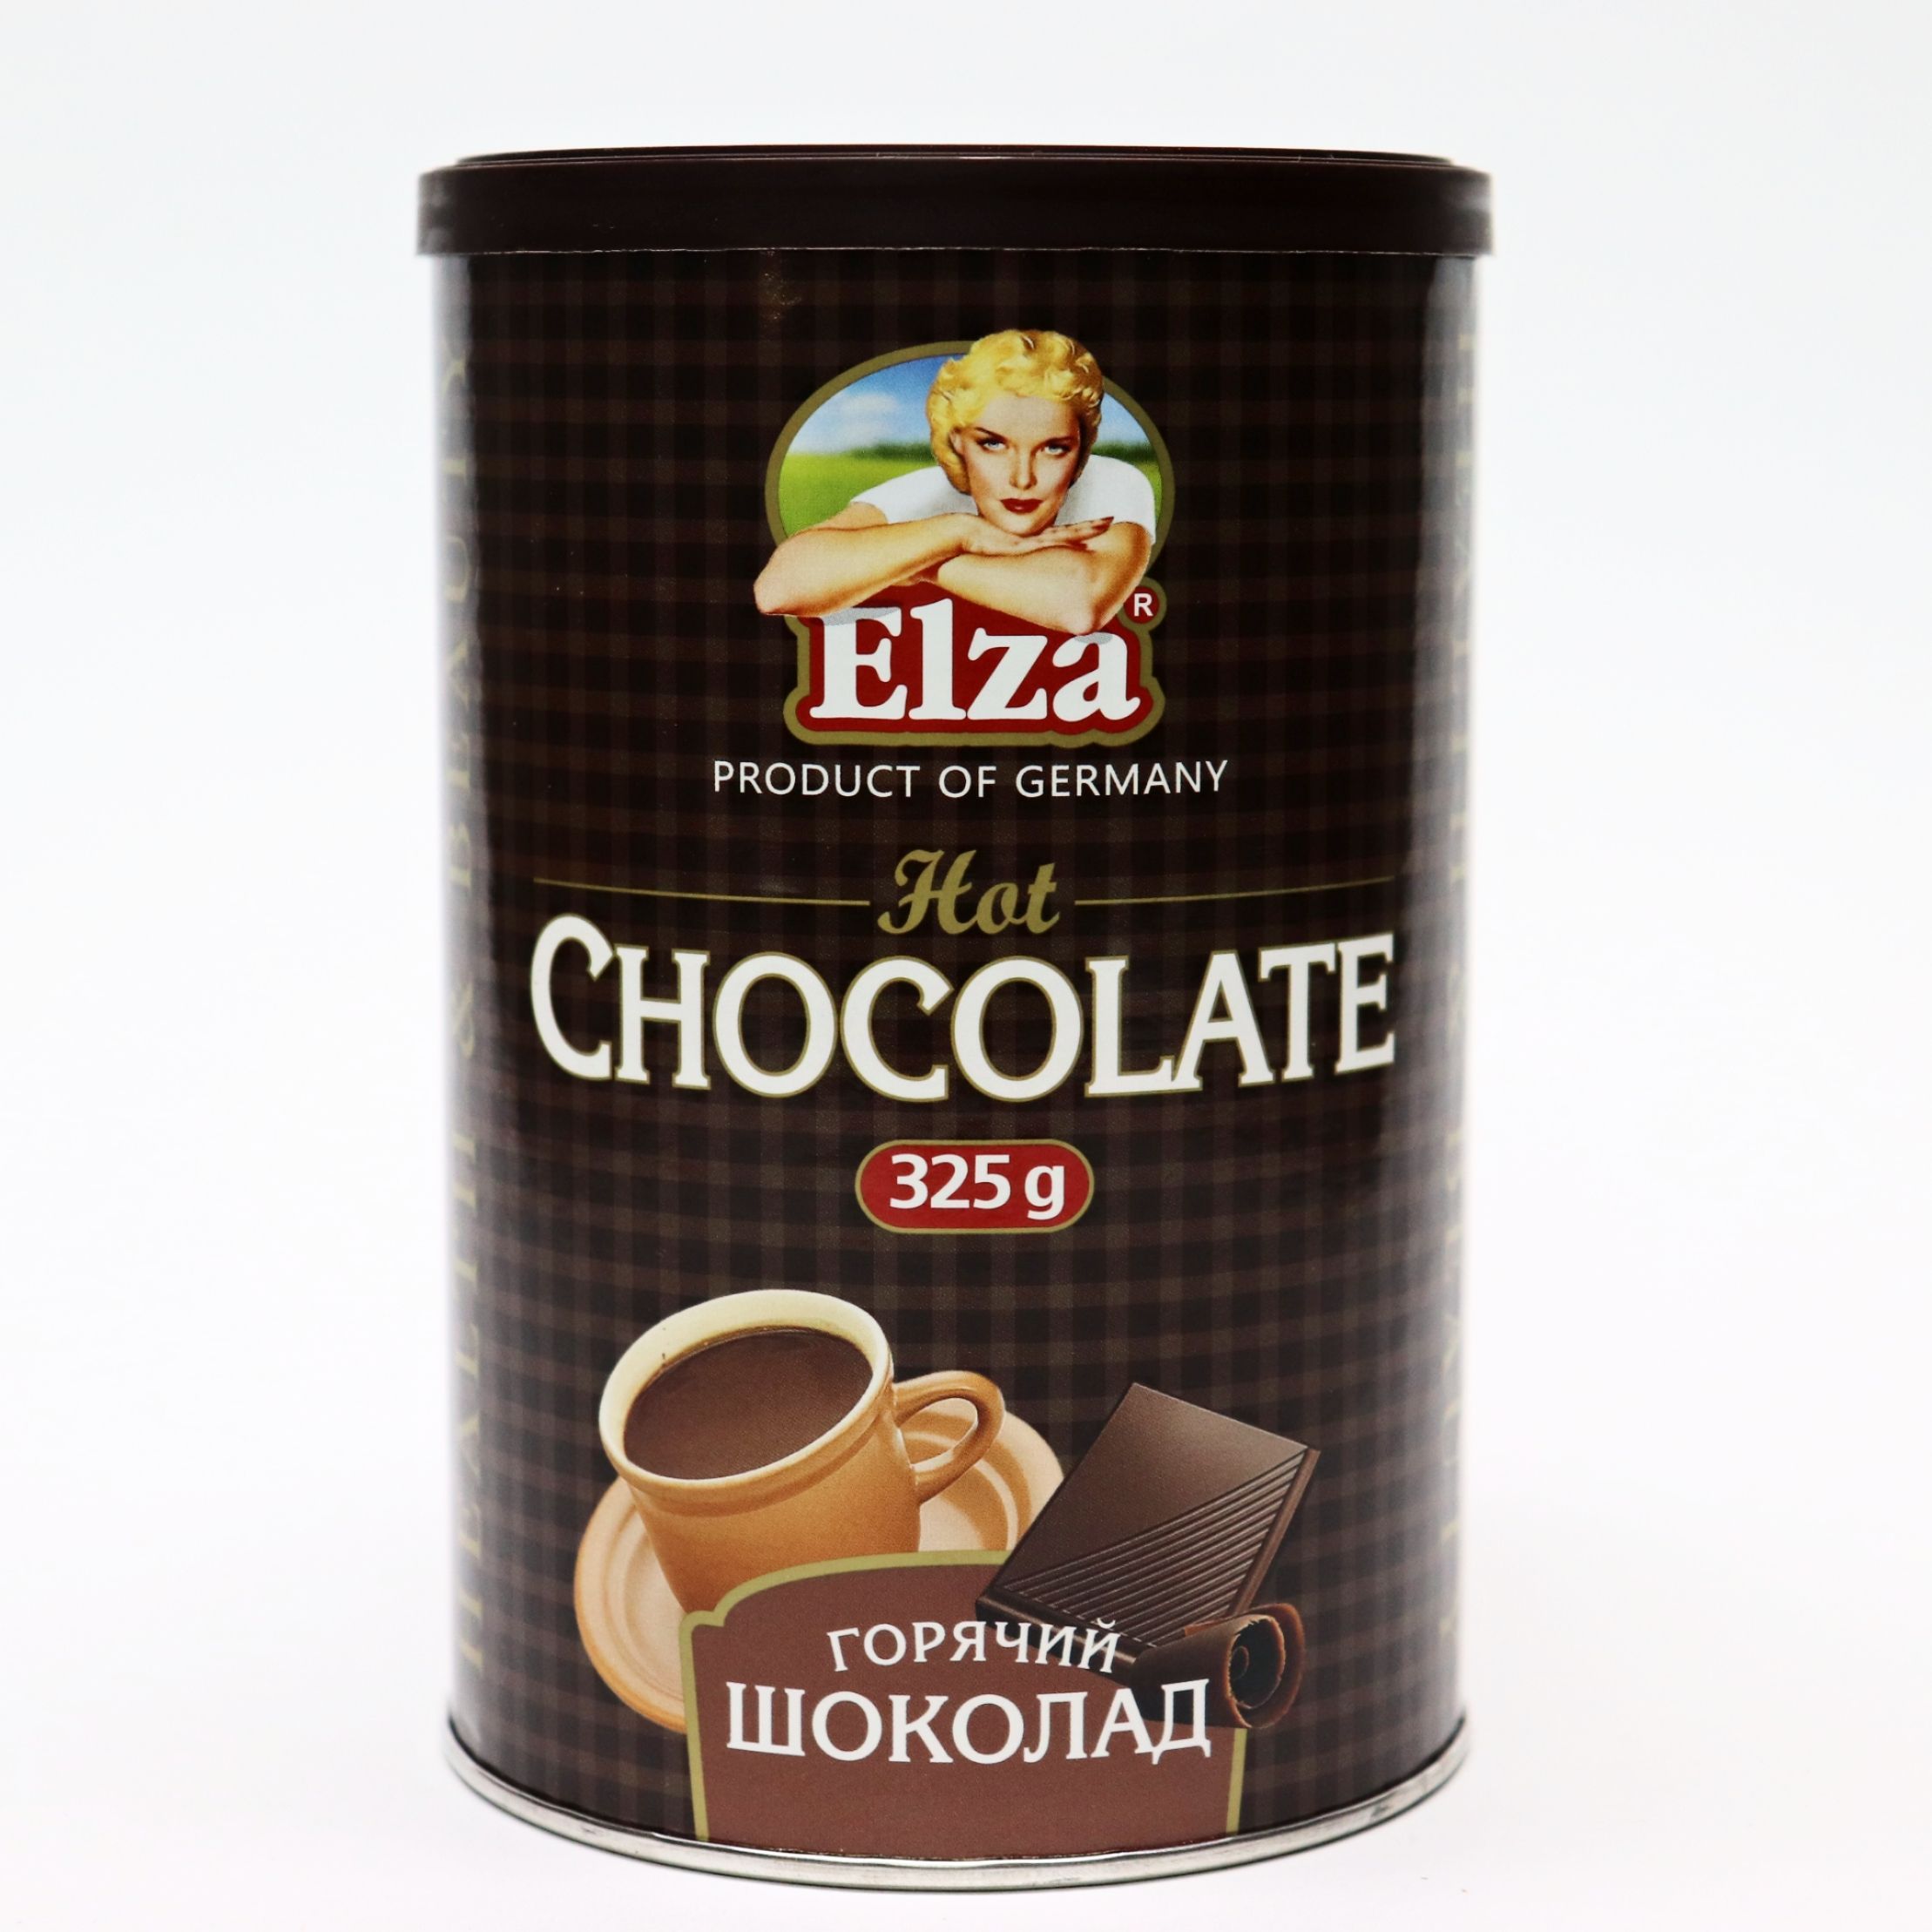 Горячий шоколад растворимый Elza Choco Band. Горячий шоколад Elza, 325 гр.